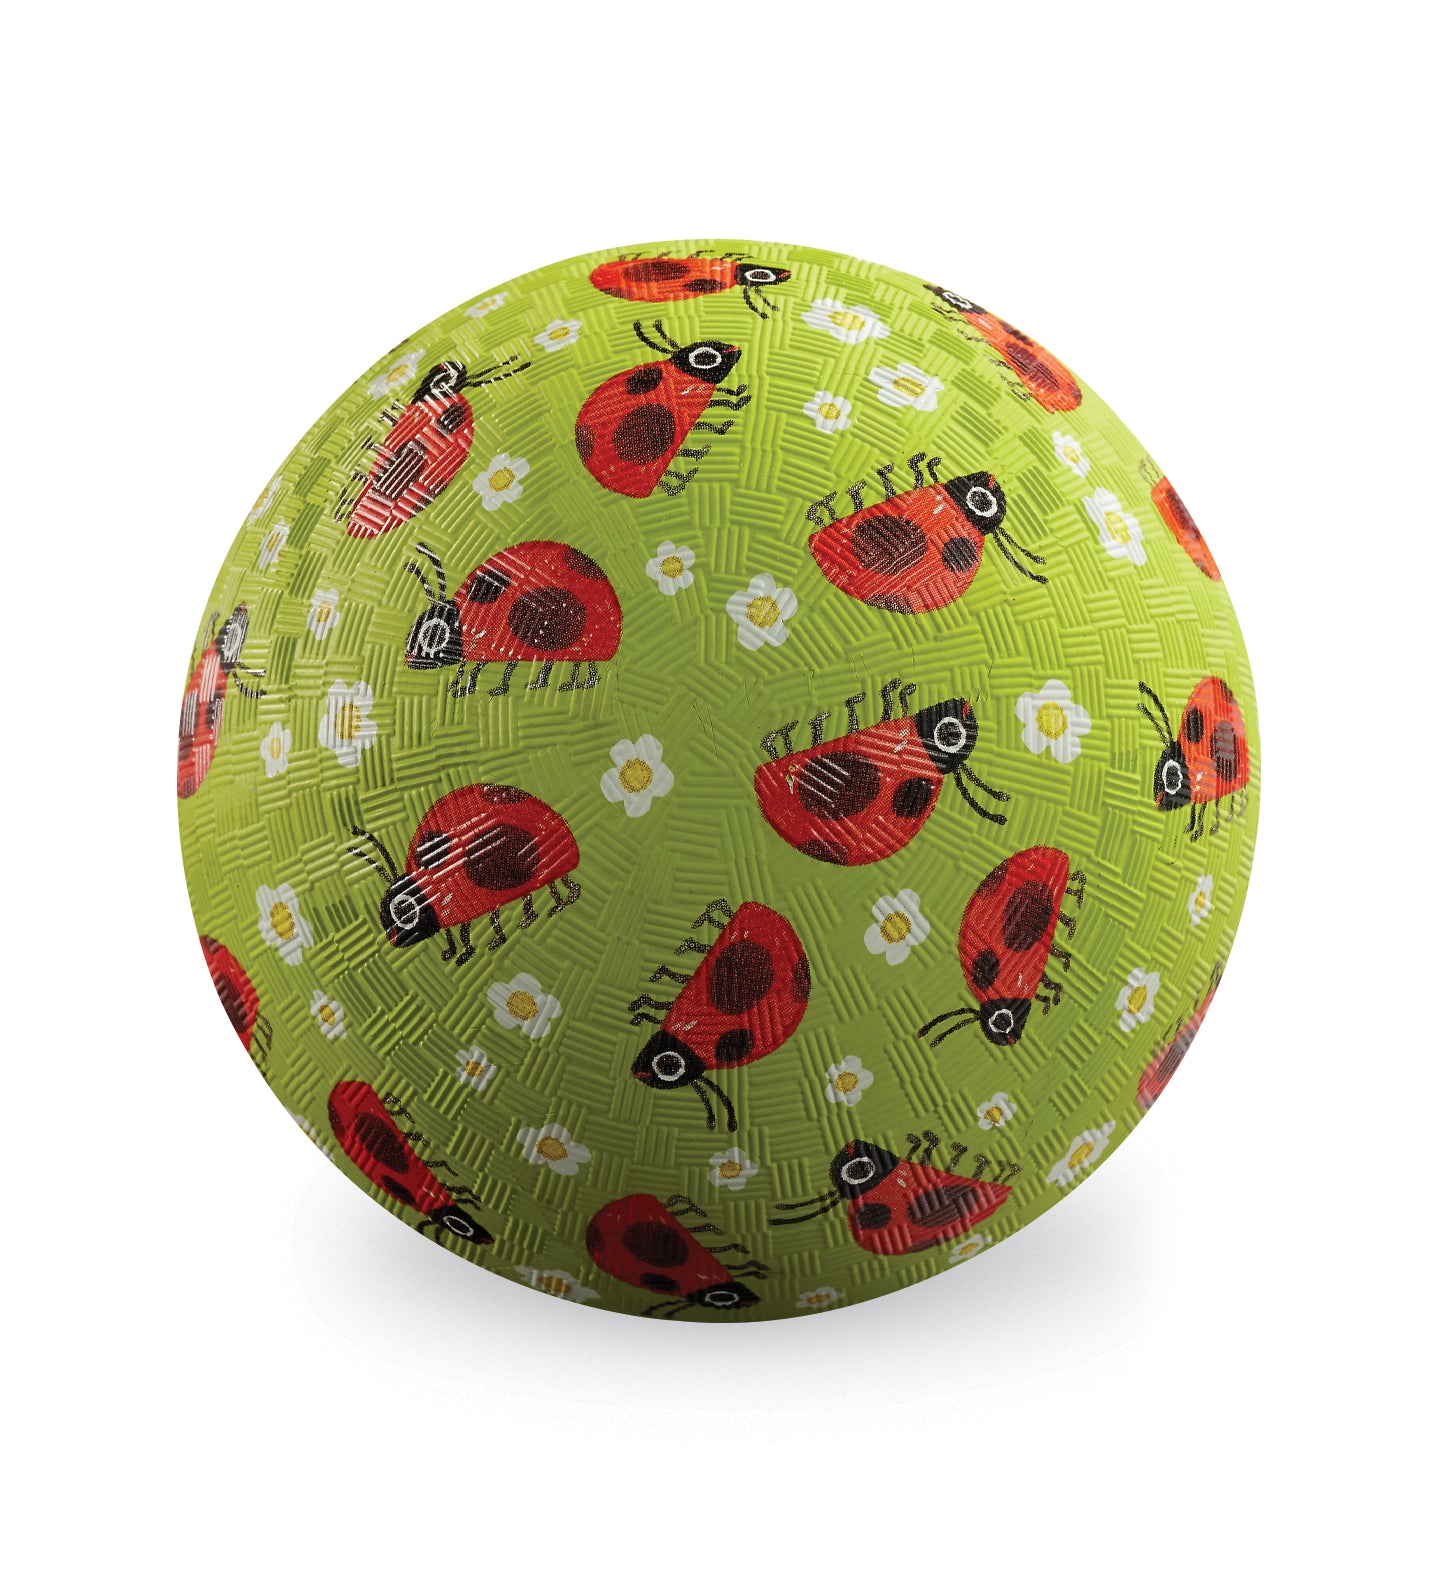 5" Playground Ball - Ladybugs